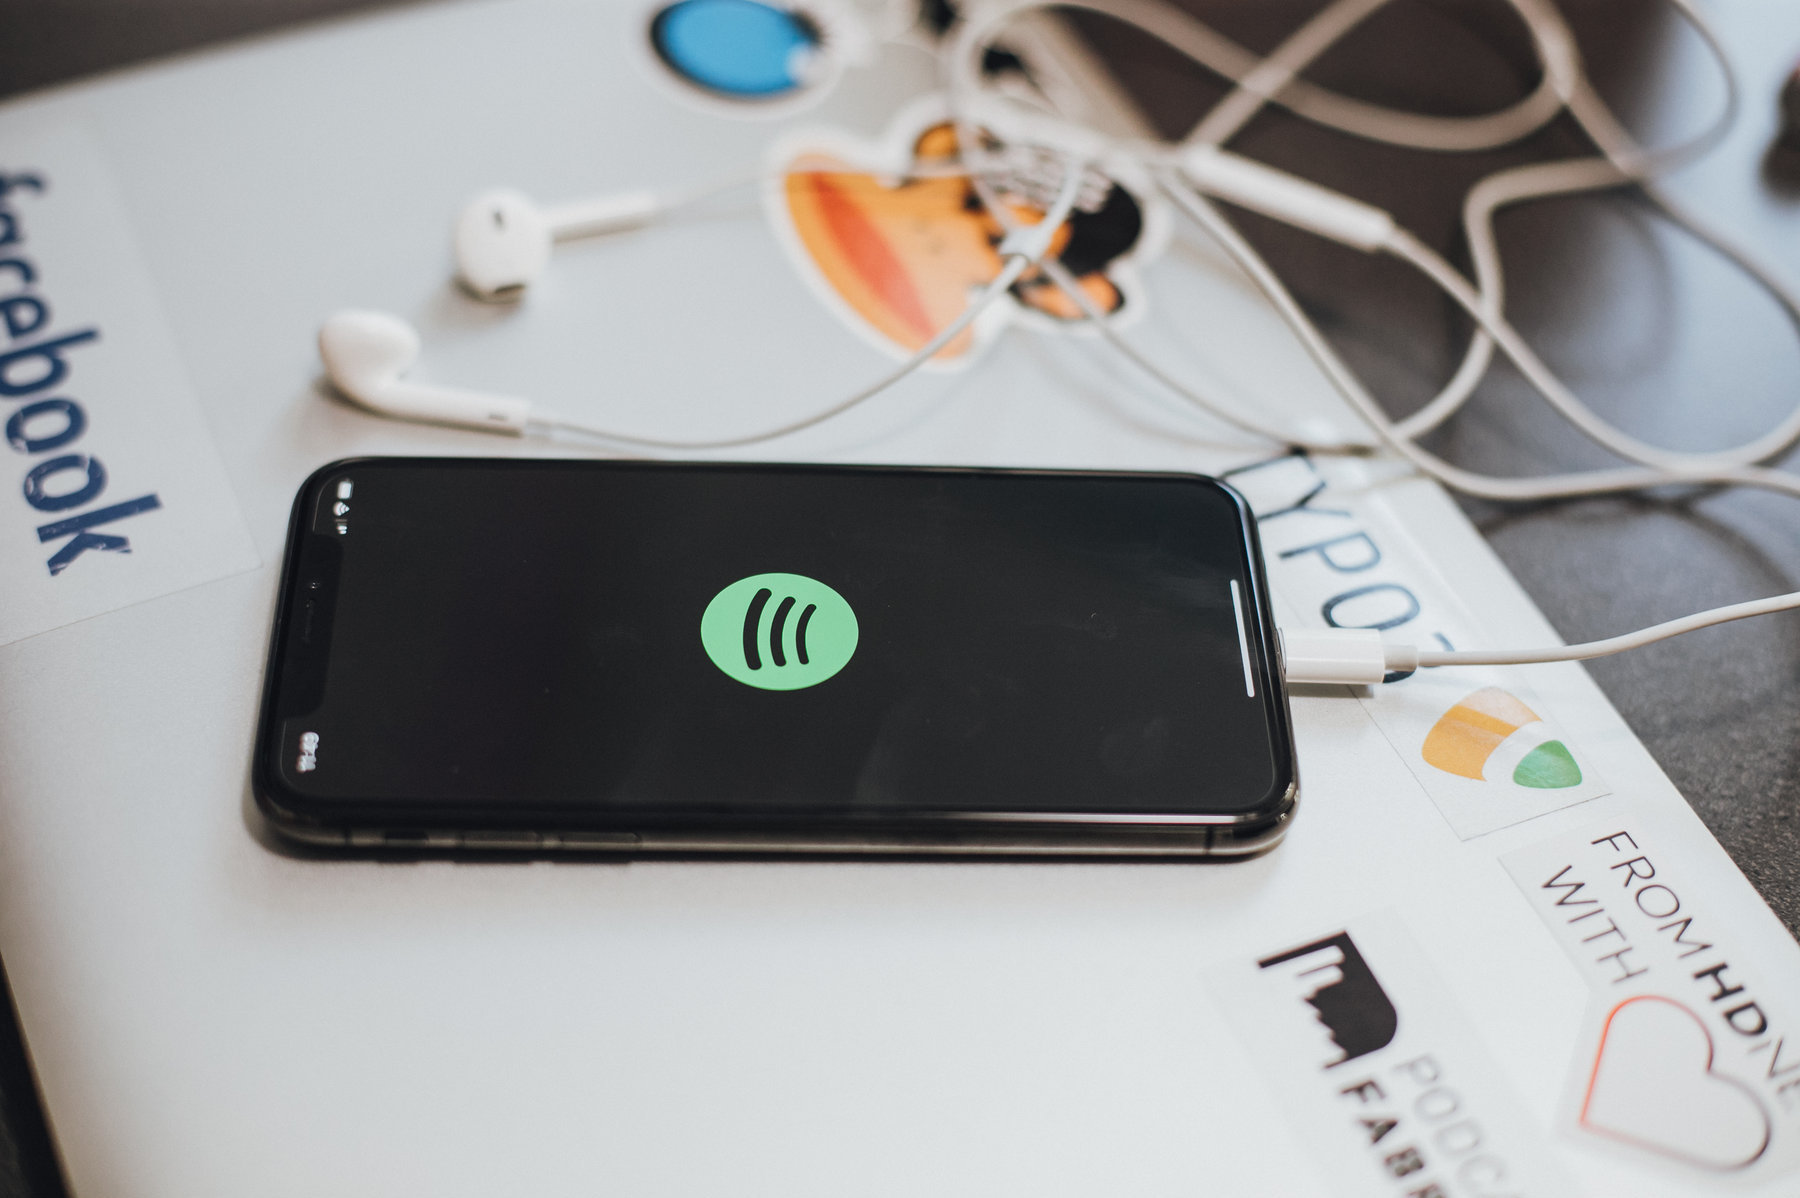 Spotify-App auf dem Smartphone geöffnet